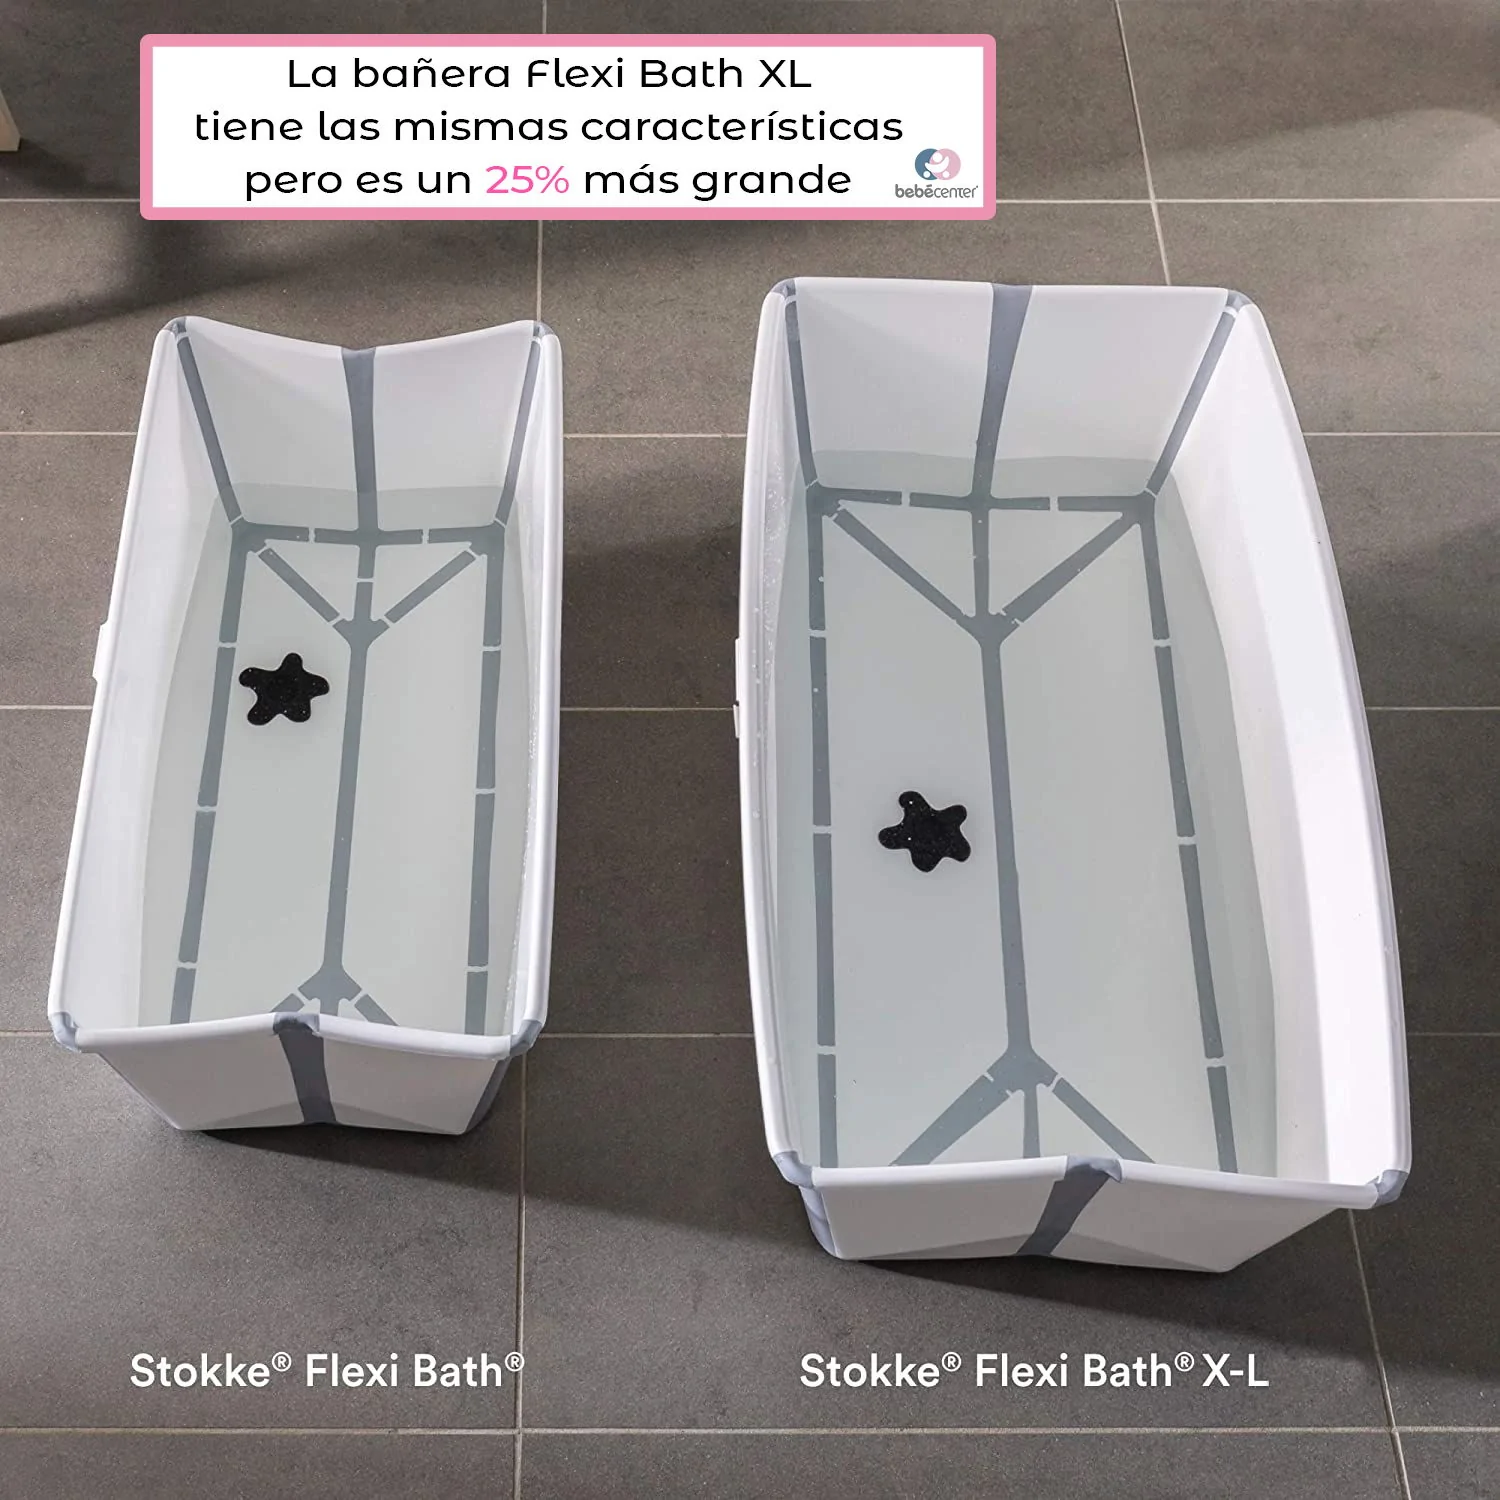 Bañera Stokke Flexi Bath XL